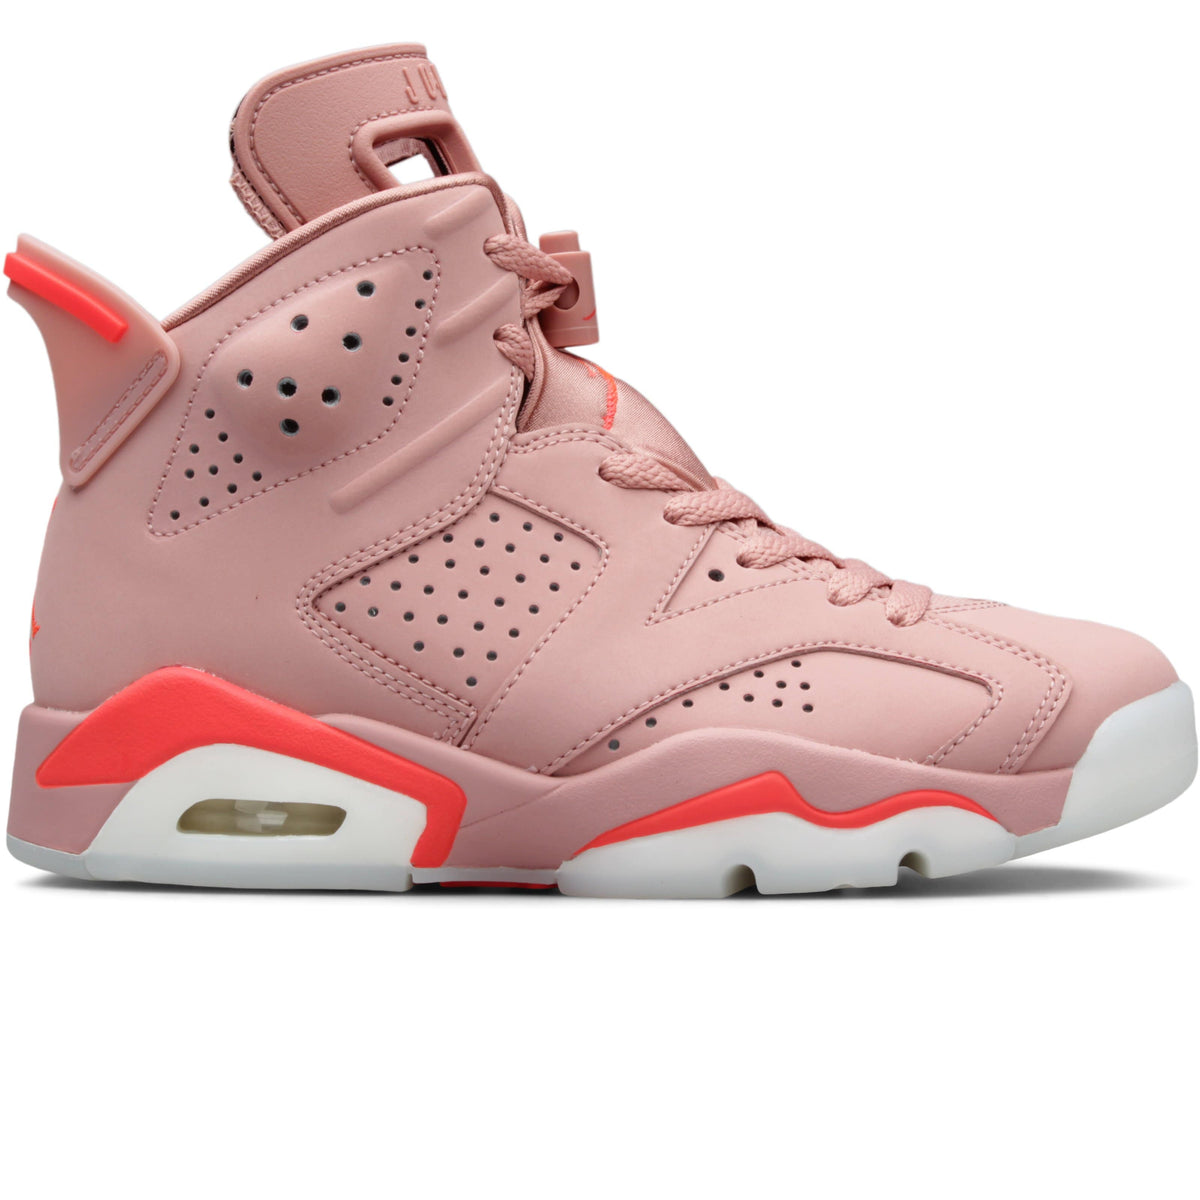 jordan shoes for women pink